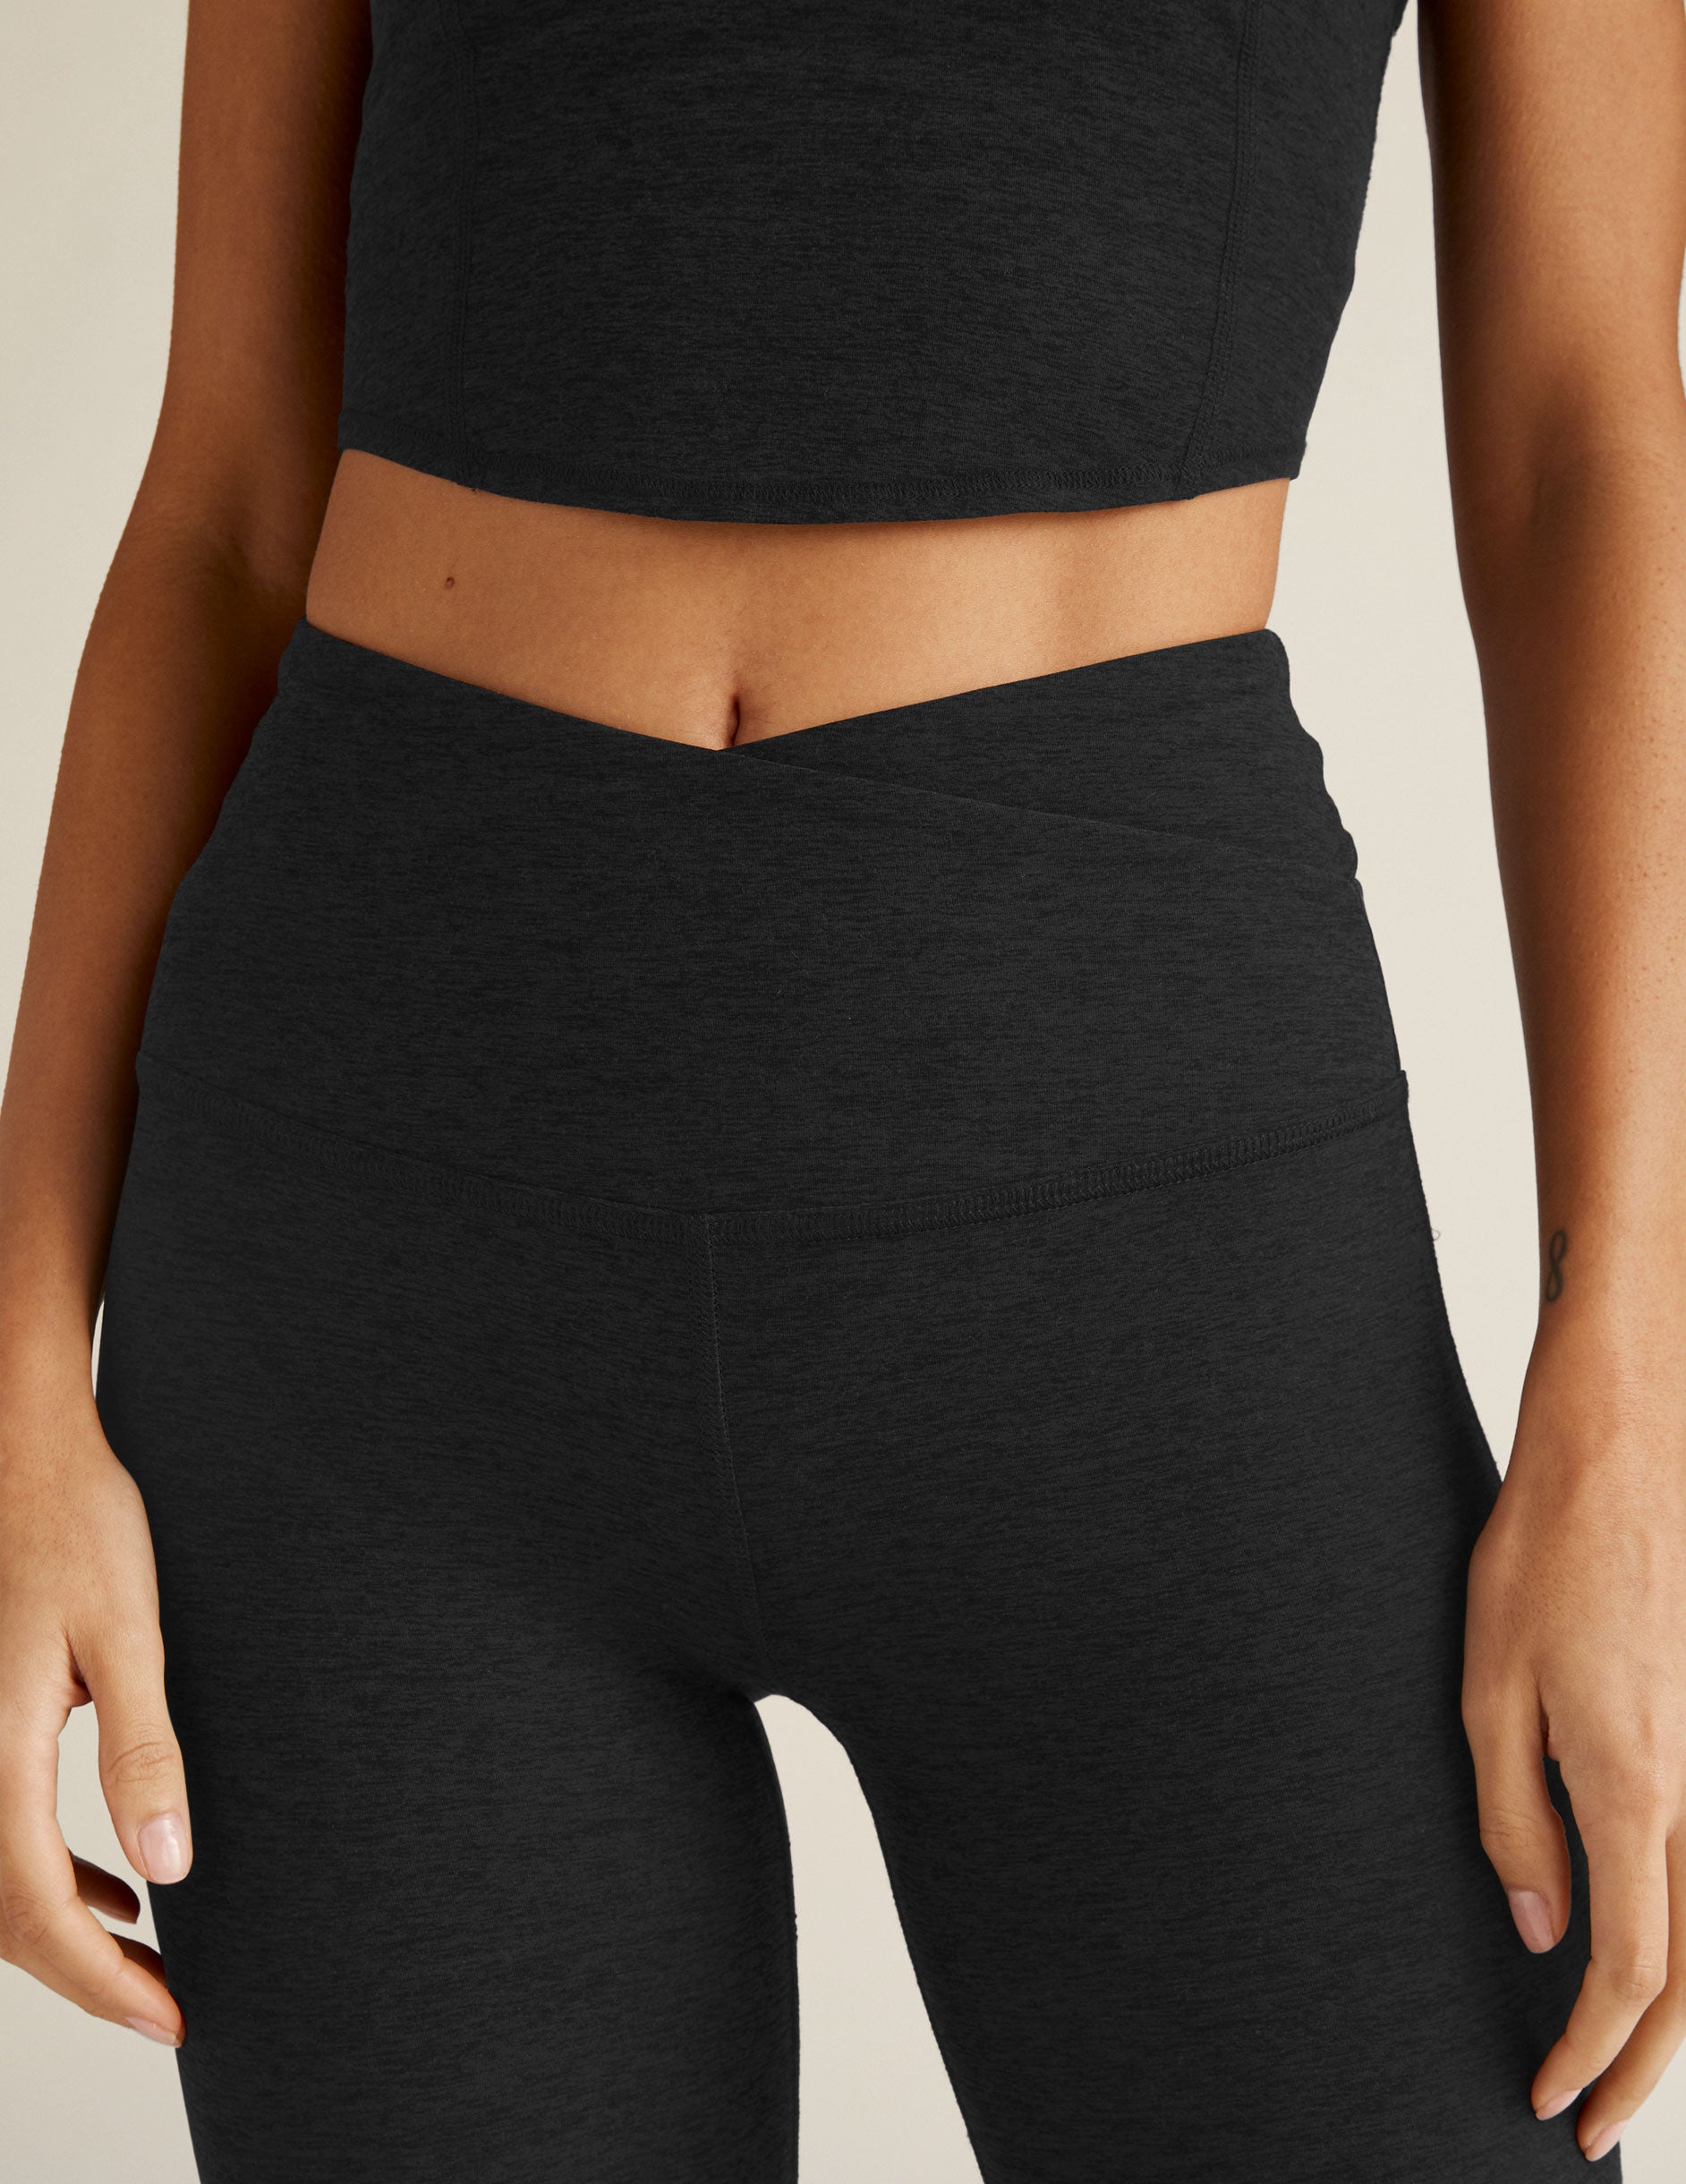 Buy MOOSLOVER Women V Cross Waist Bootcut Yoga Pants with Pockets High  Waisted Flare Leggings Split Work Pants, #1 Black, Medium at Amazon.in